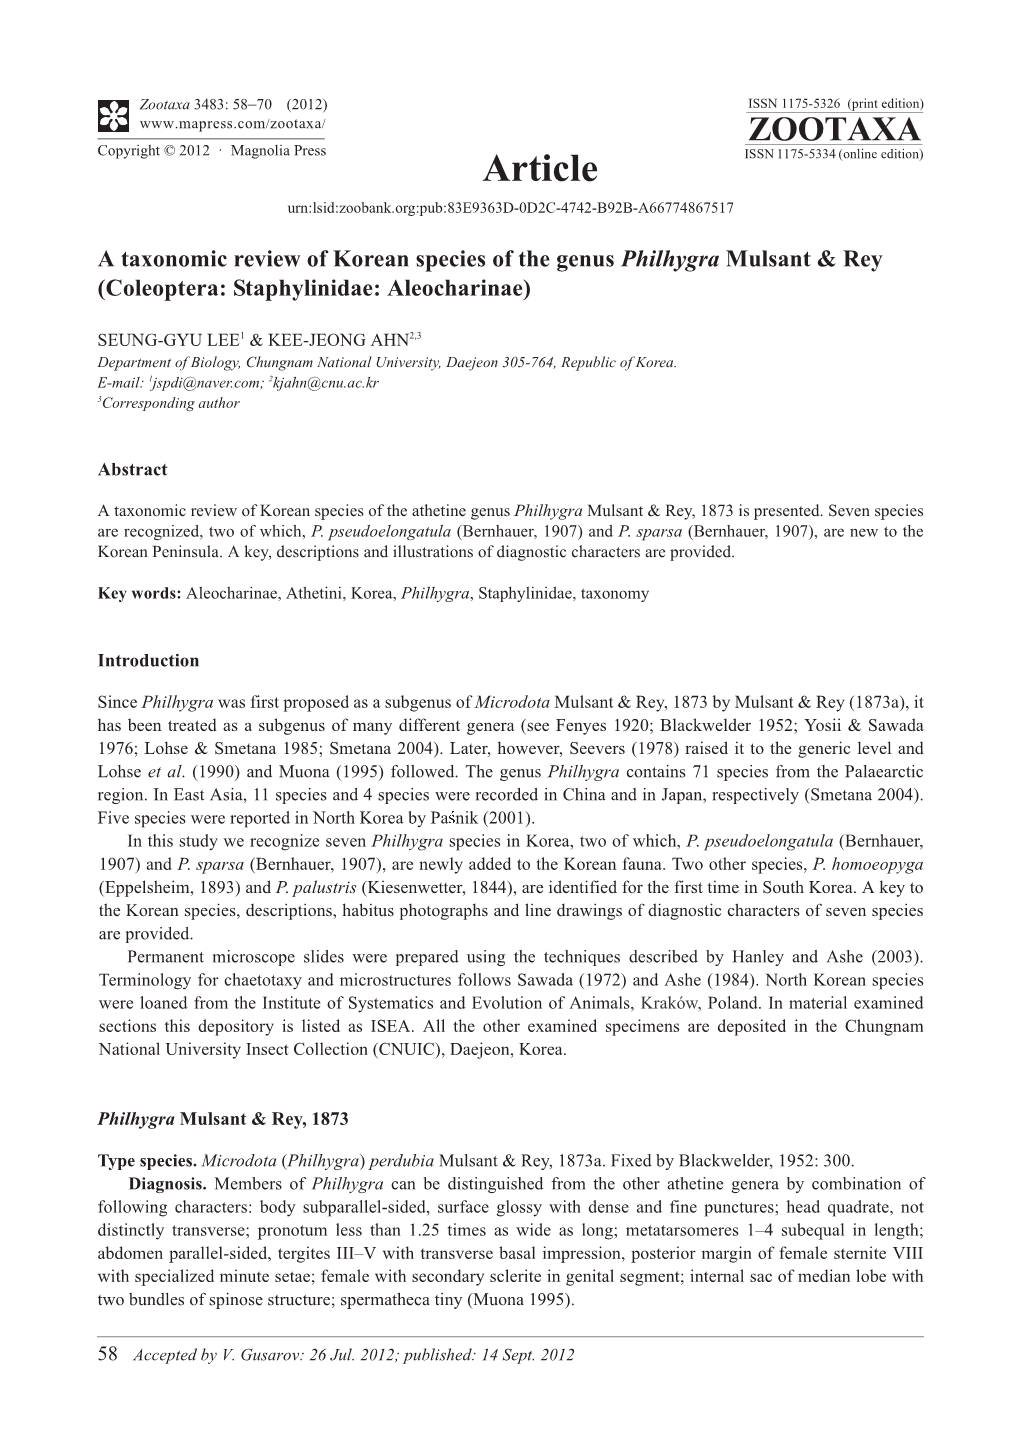 A Taxonomic Review of Korean Species of the Genus Philhygra Mulsant & Rey (Coleoptera: Staphylinidae: Aleocharinae)